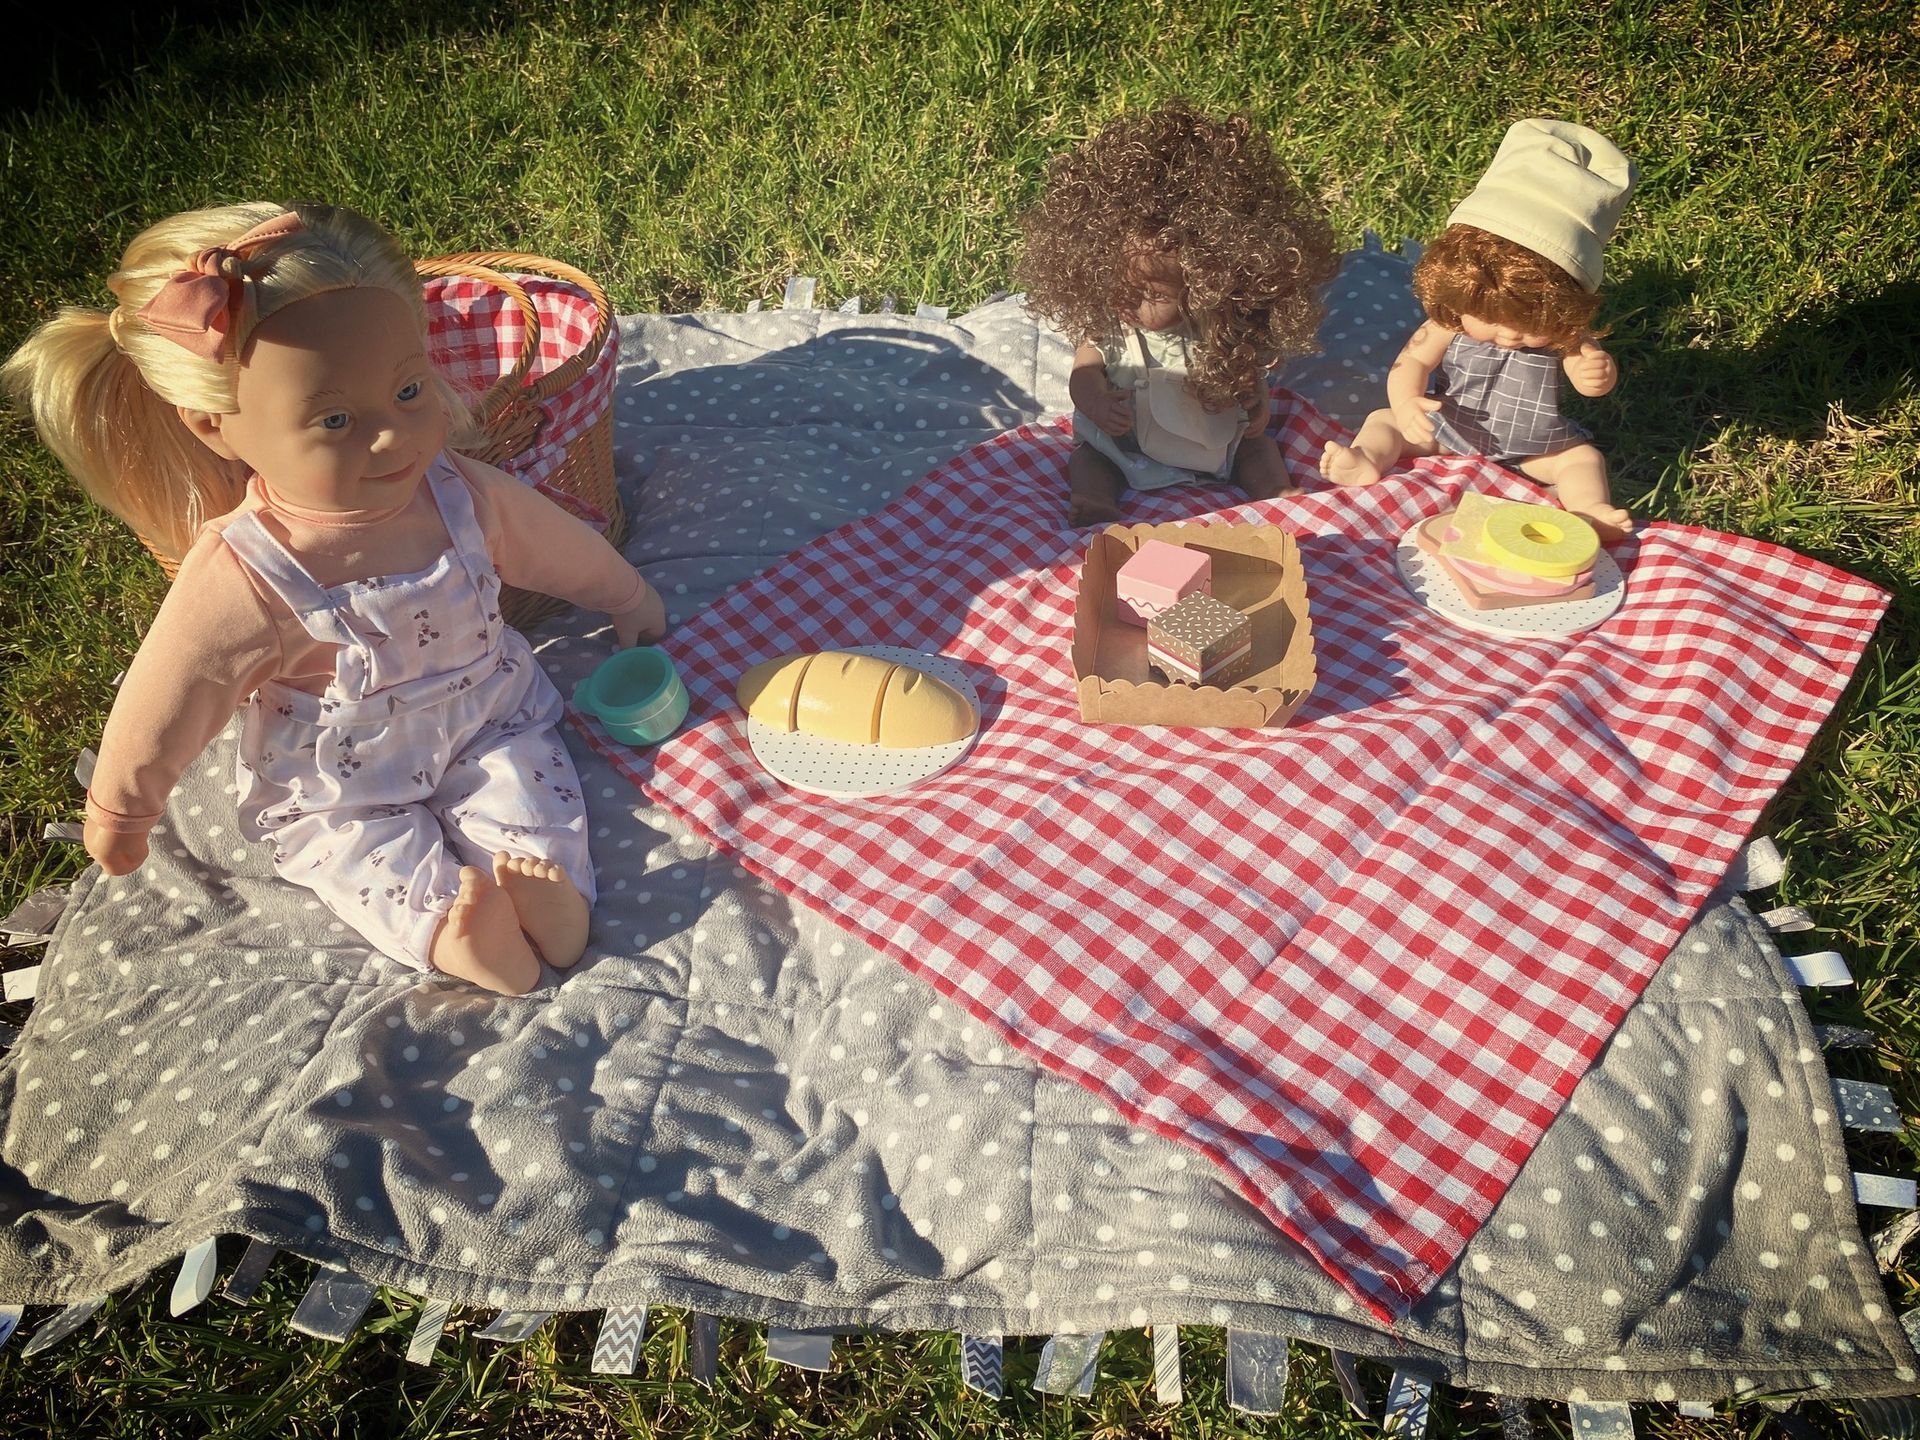 Children having a picnic — The Happy Human Hub